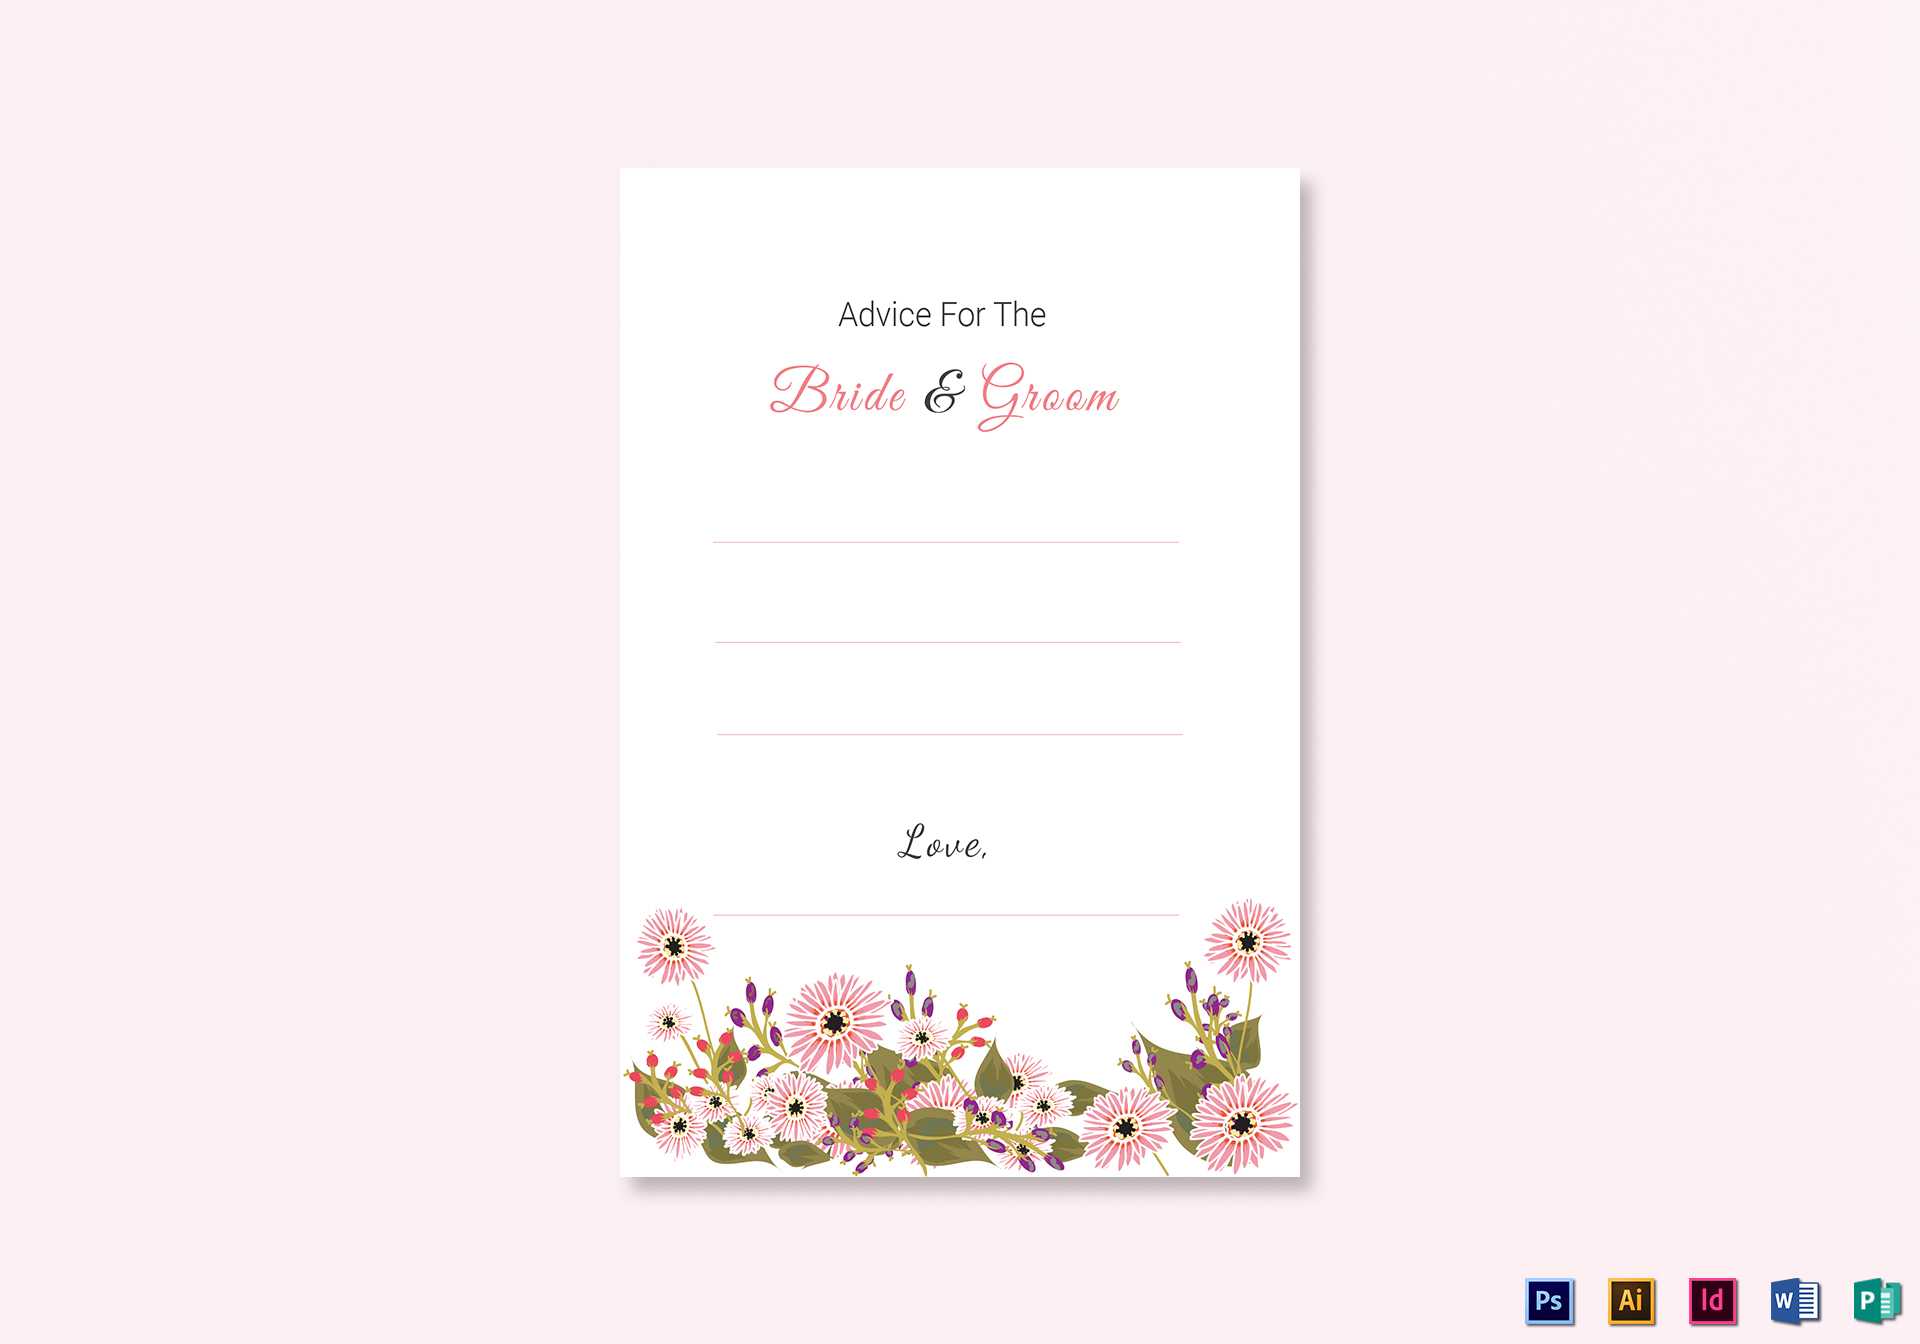 Floral Wedding Advice Card Template Regarding Marriage Advice Cards Templates